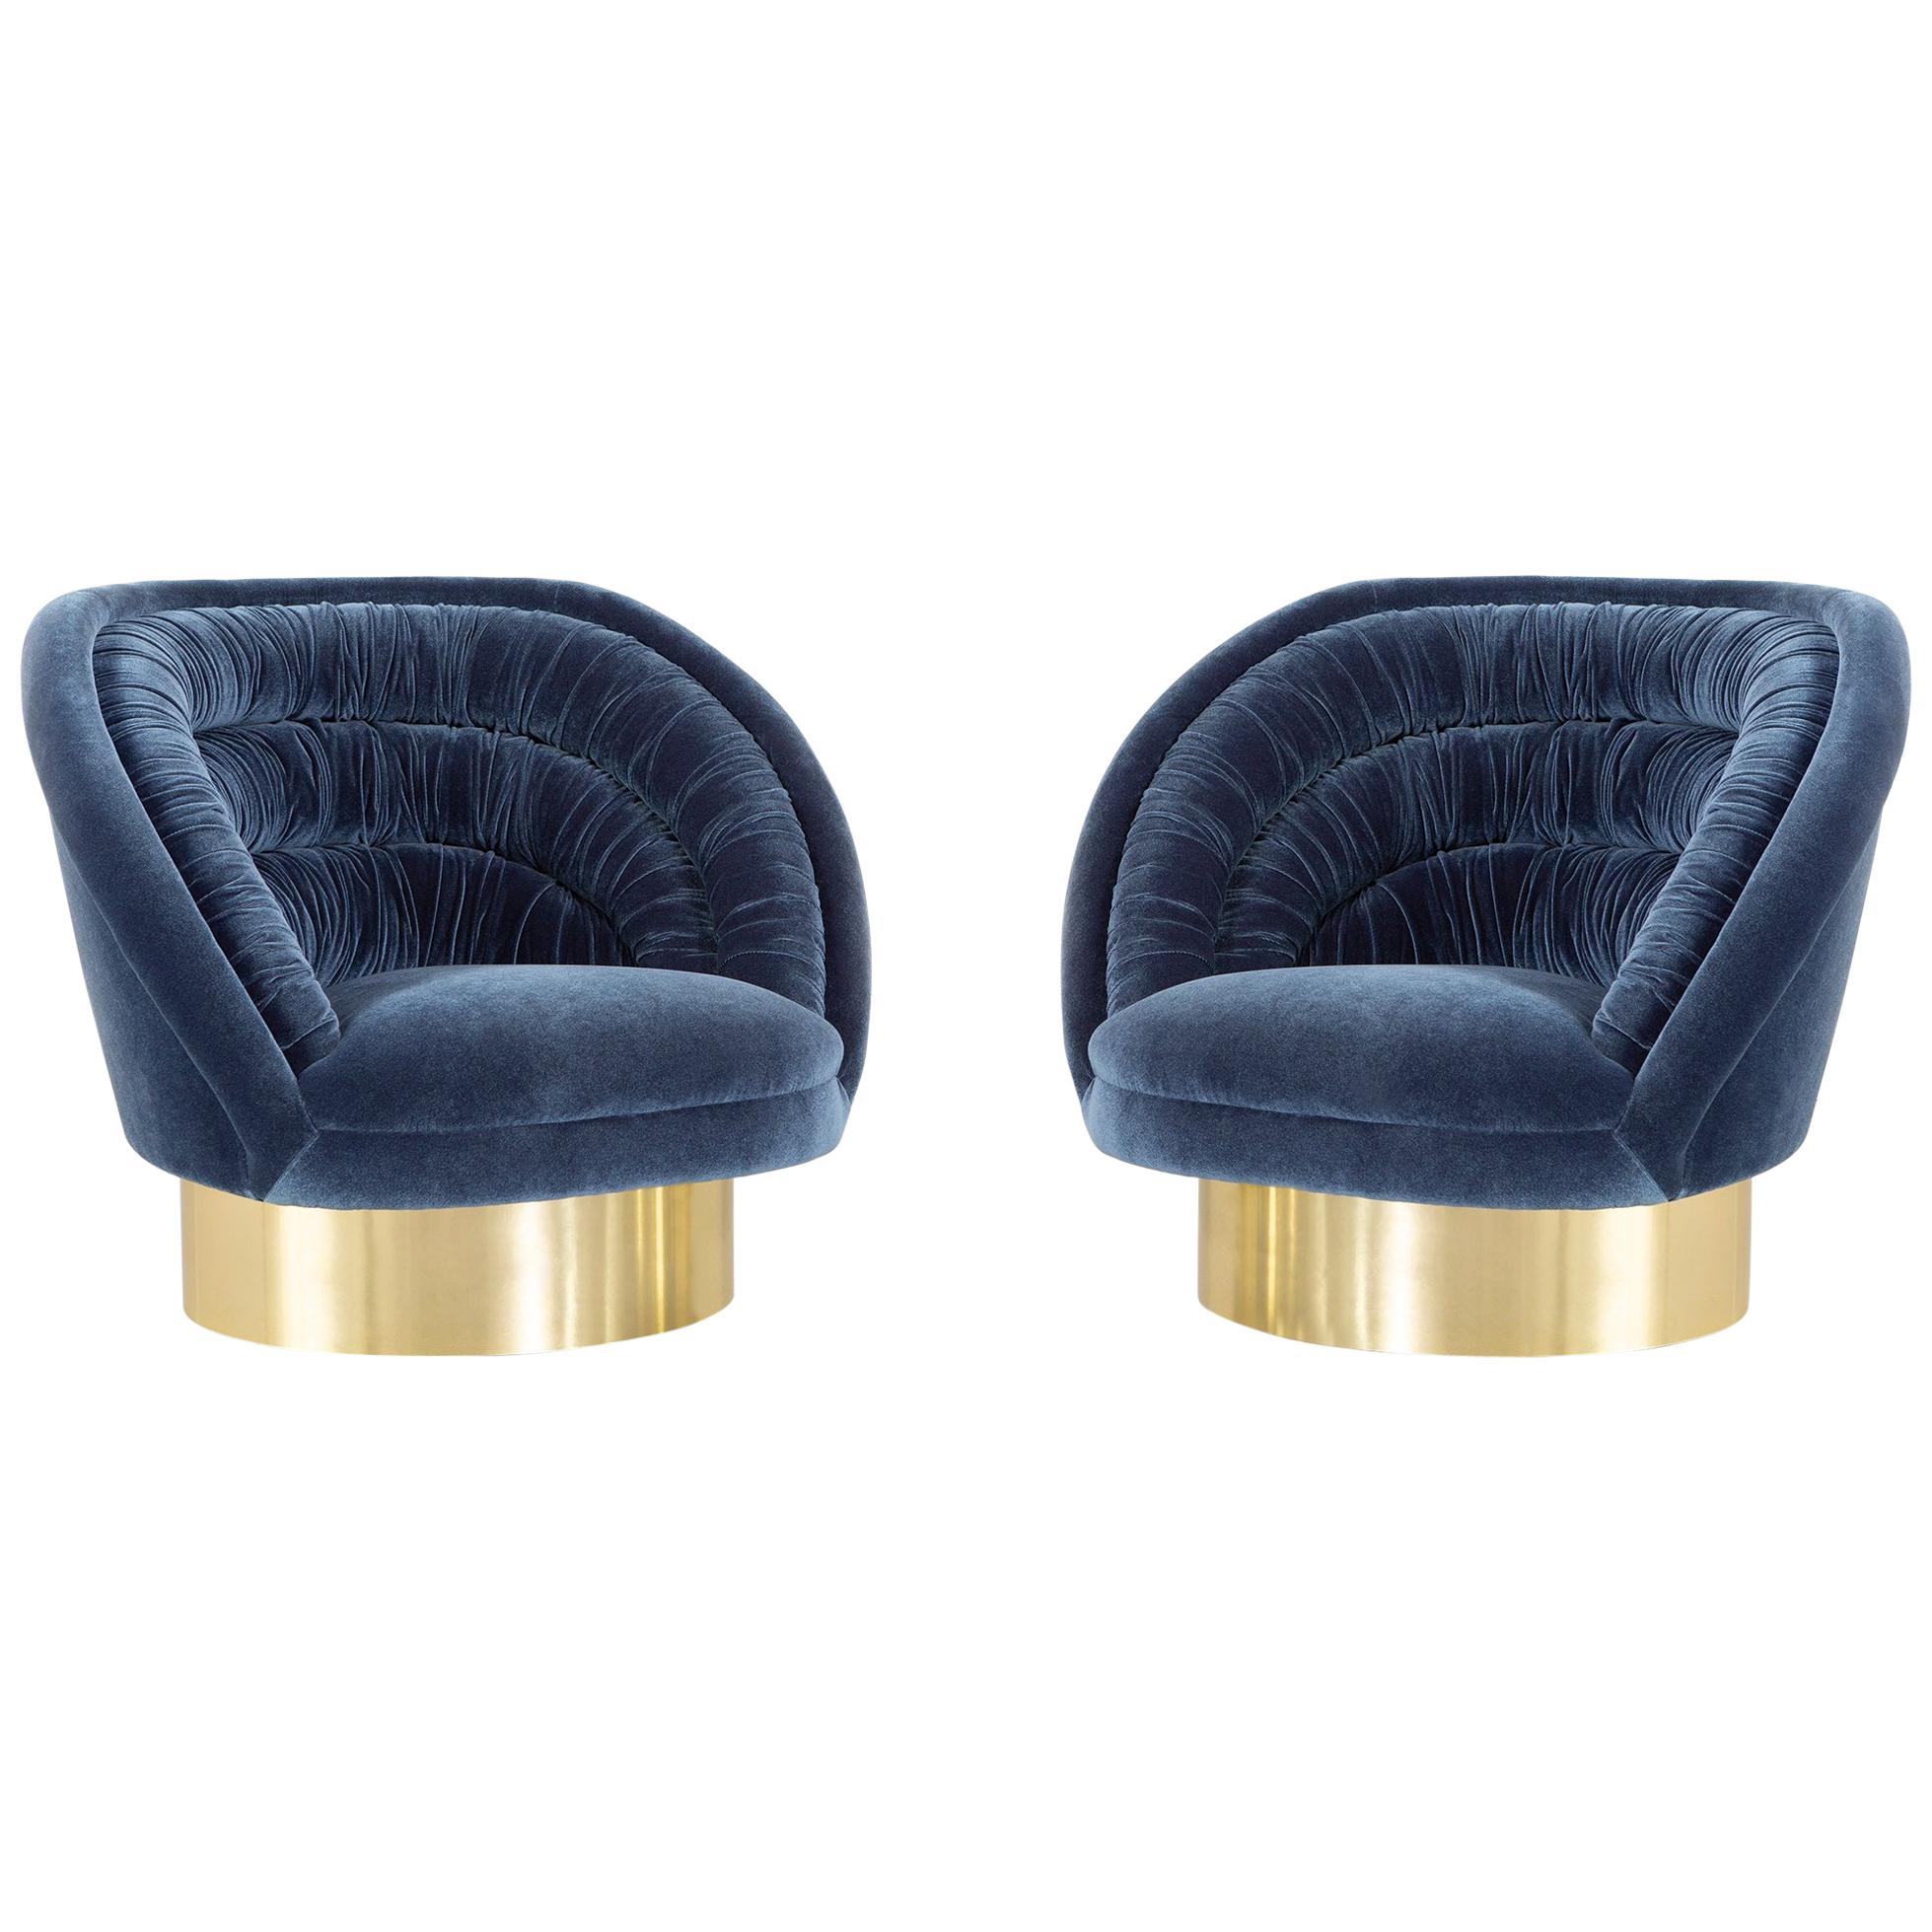 Set of Vladimir Kagan Crescent Chairs Freshly Reupholstered